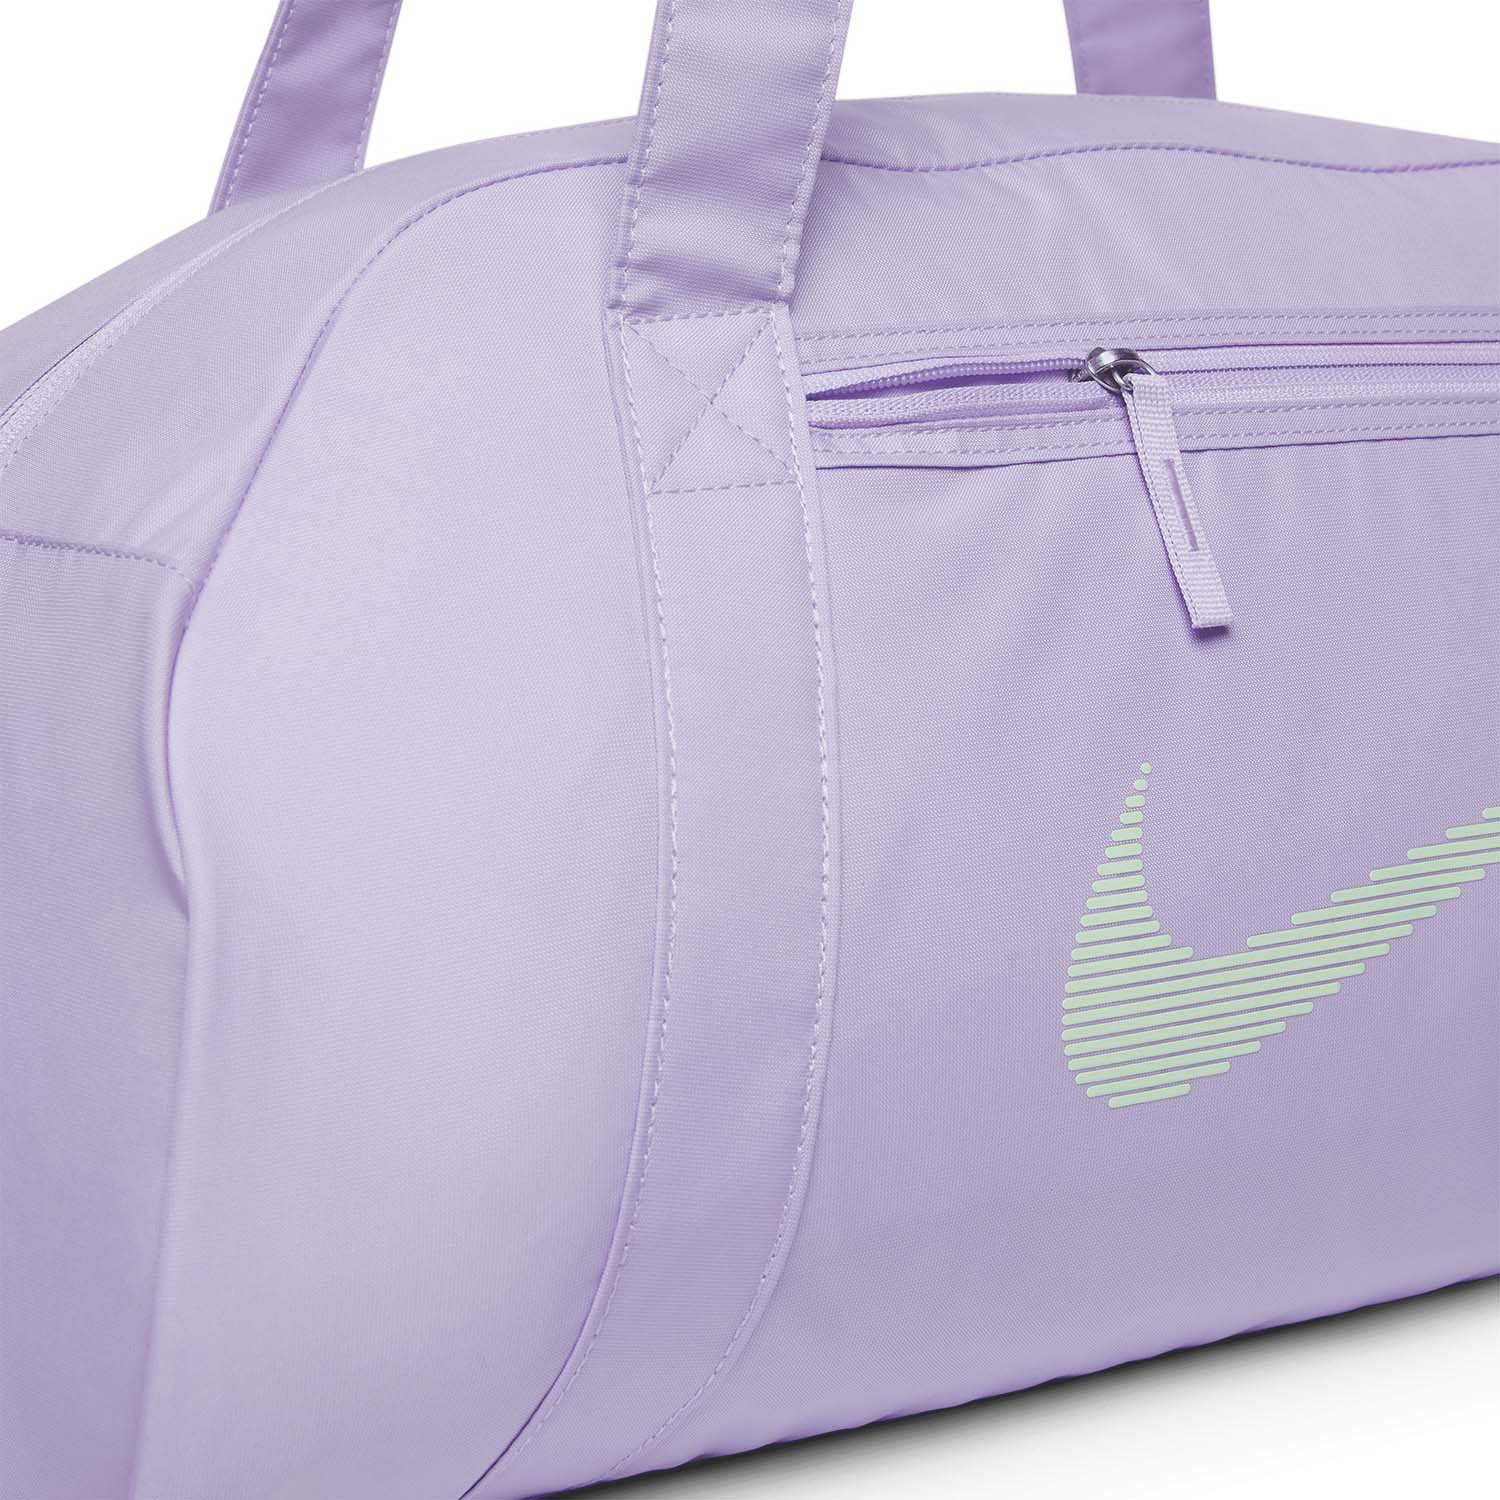 Nike Club Duffle - Lilac Bloom/Vapor Green